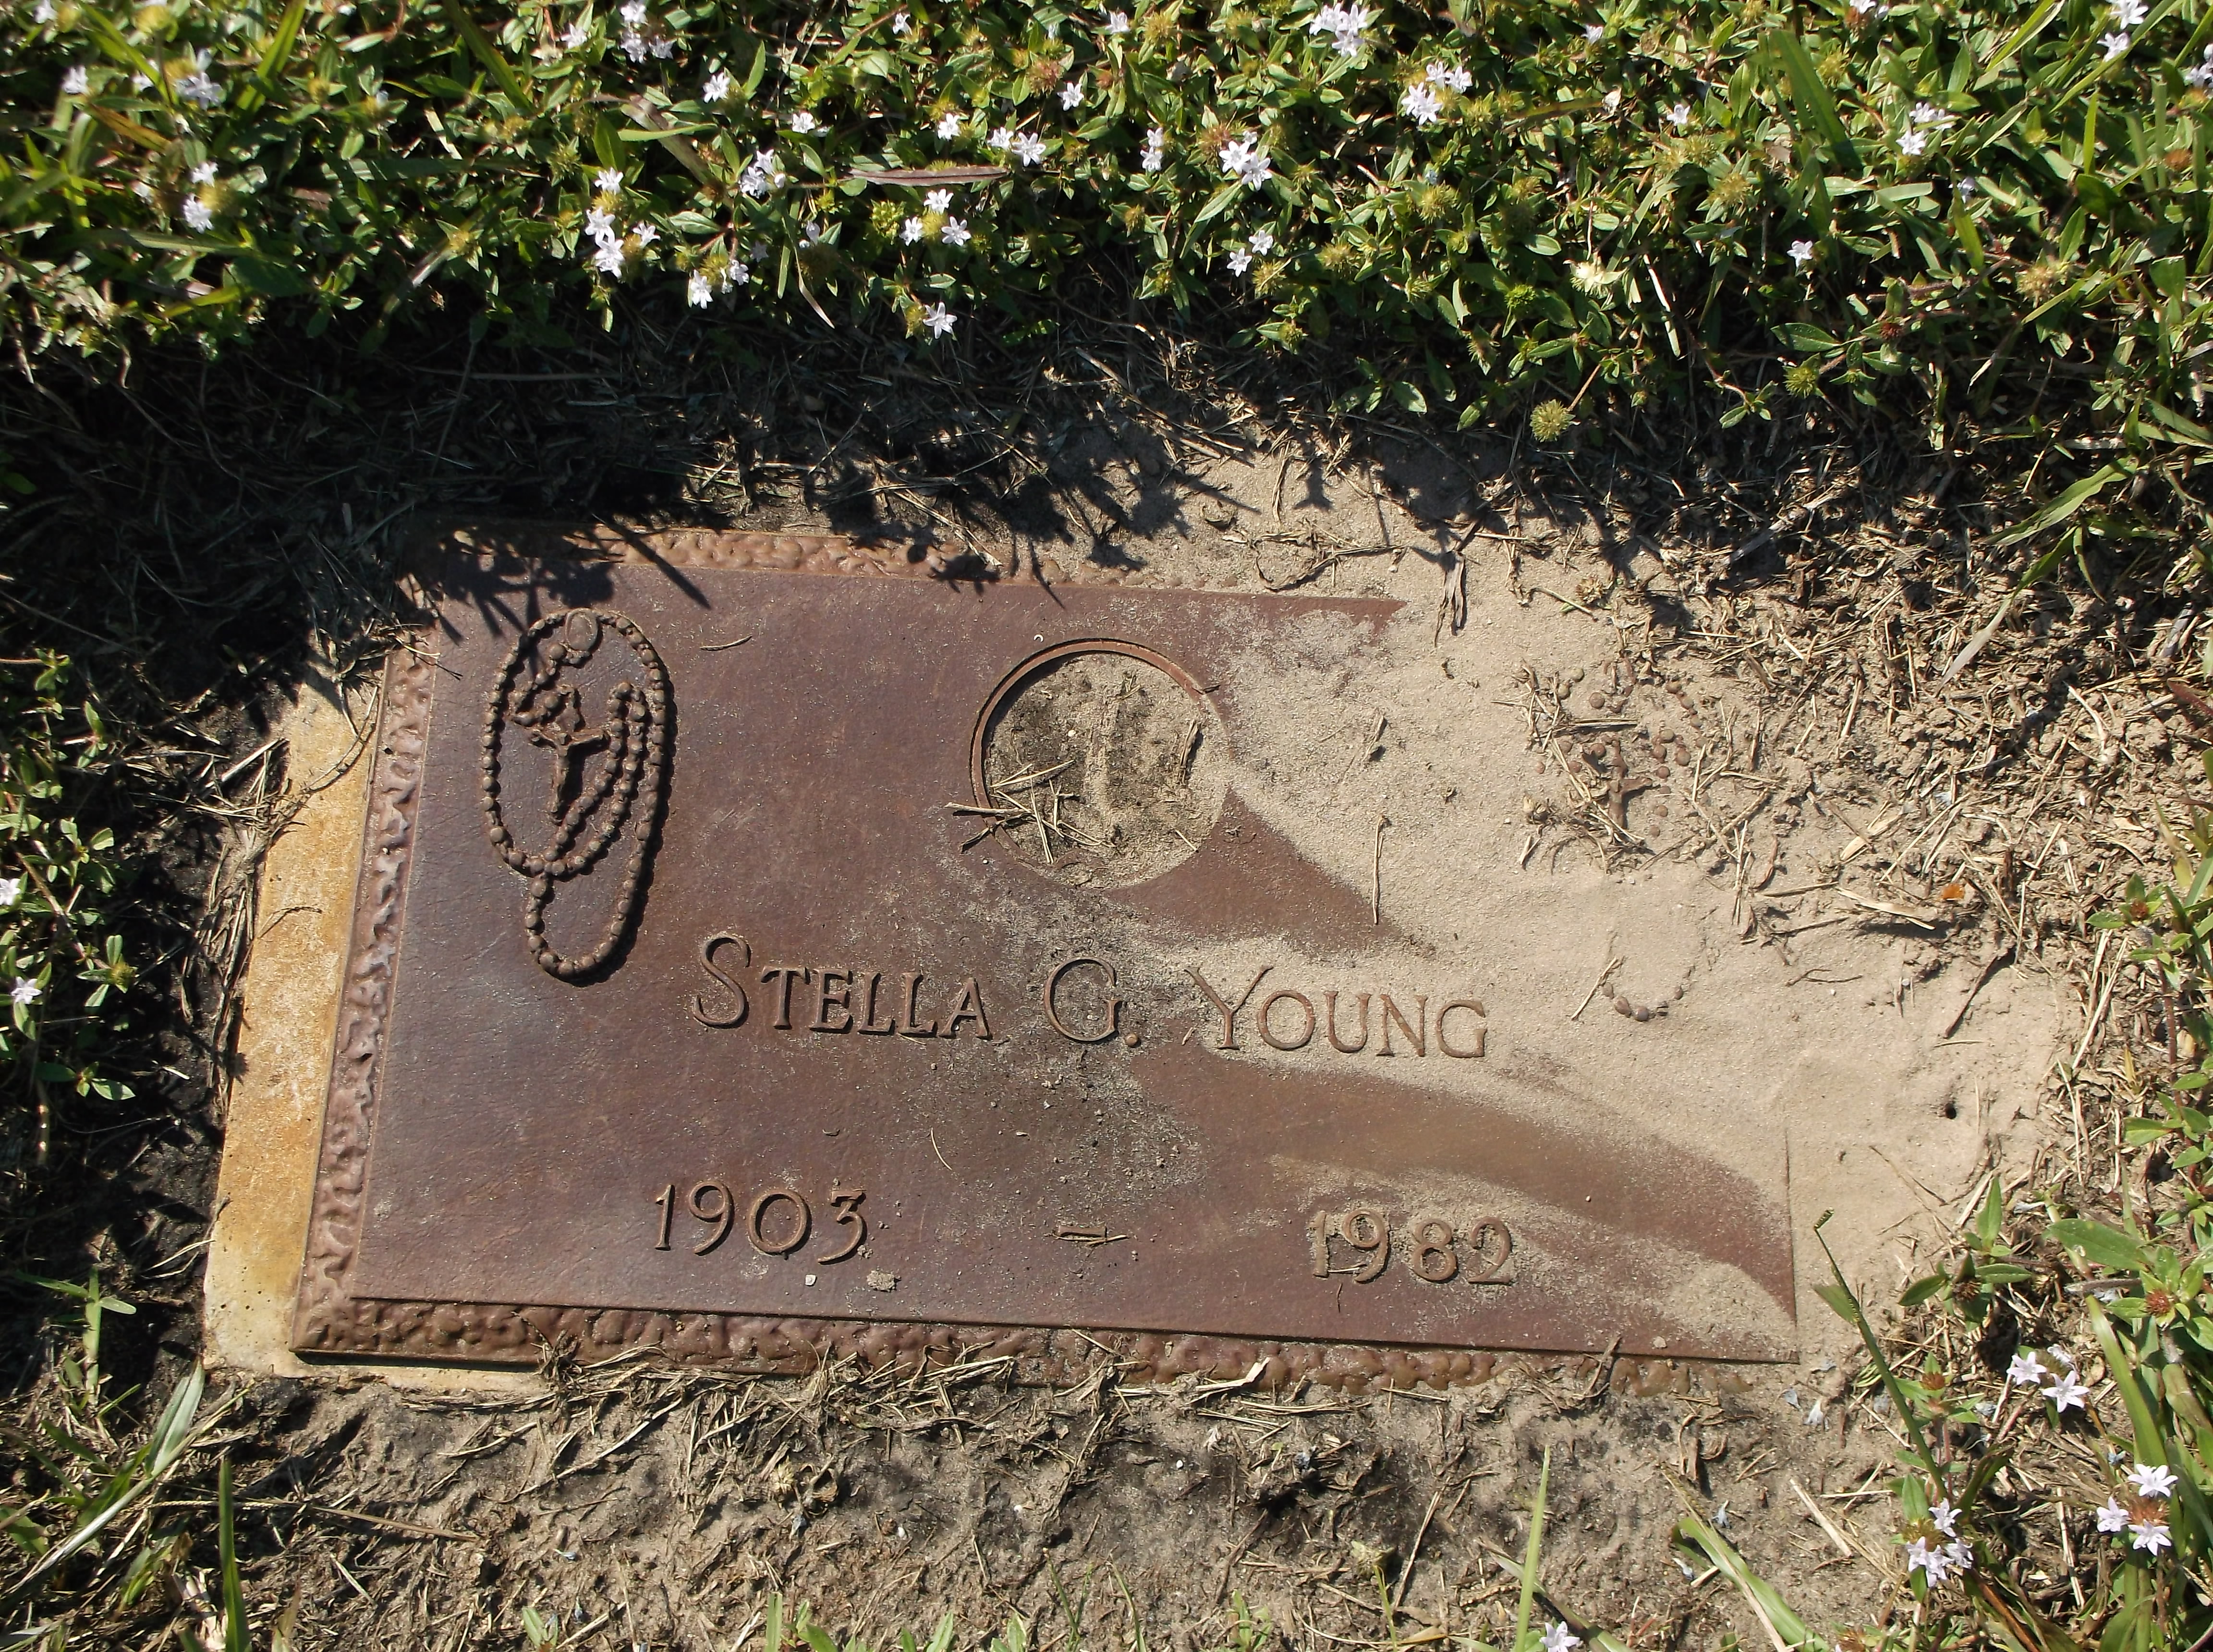 Stella G Young